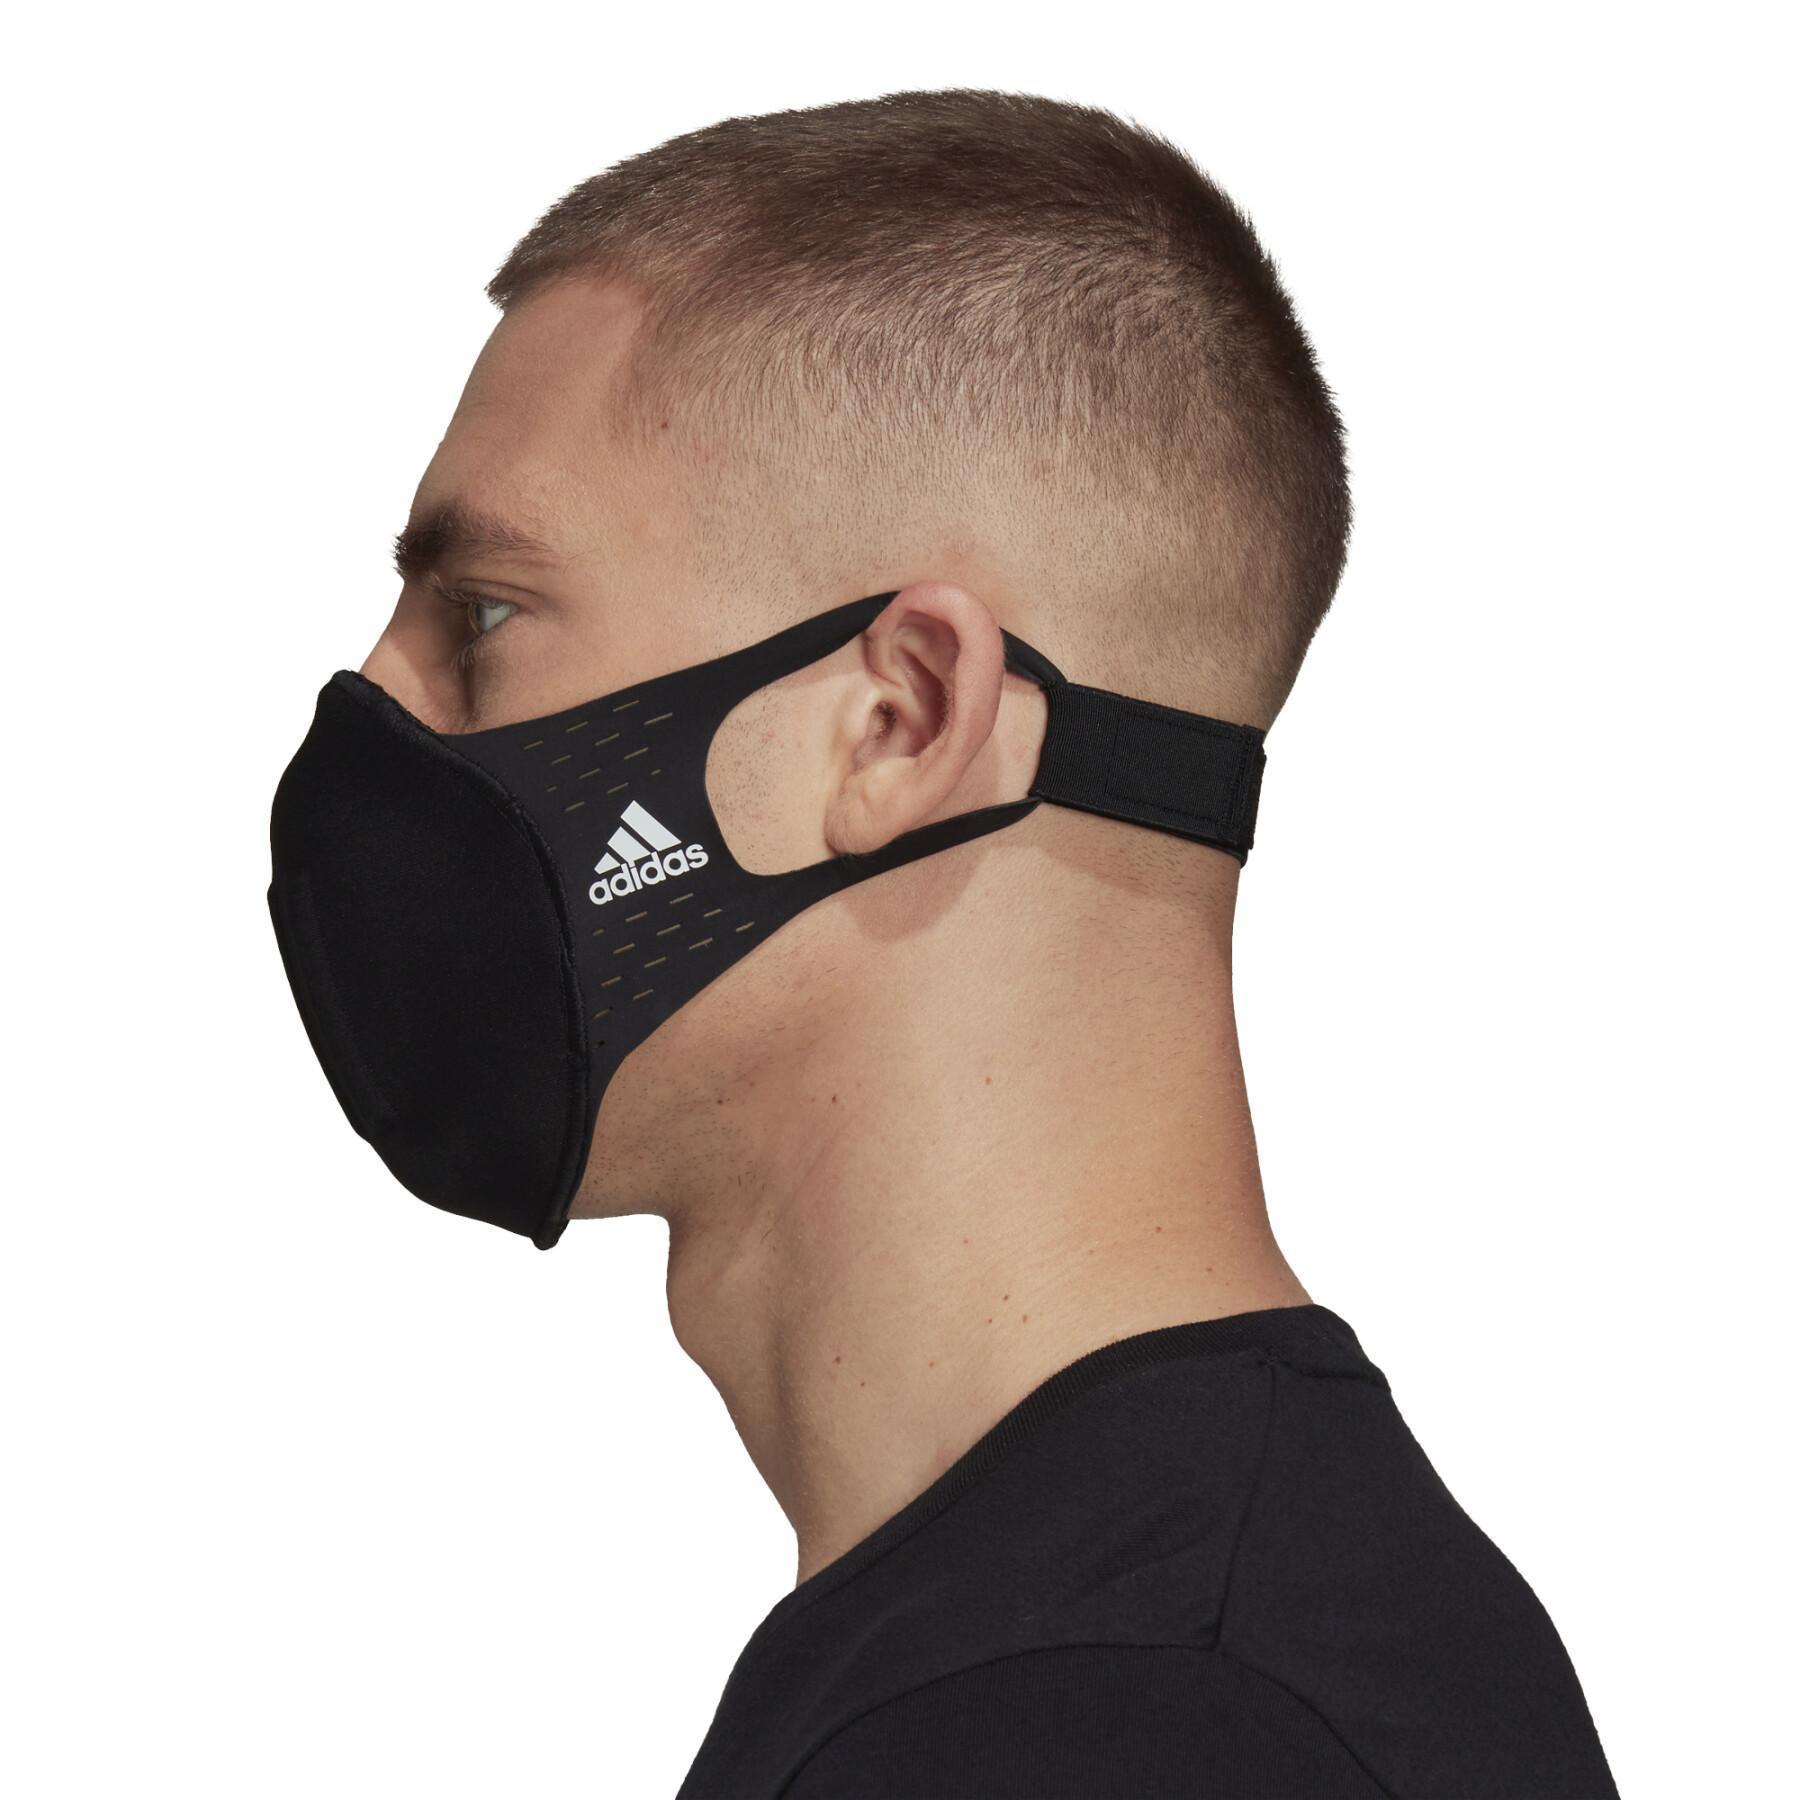 Geformte Maske adidas Made for Sport